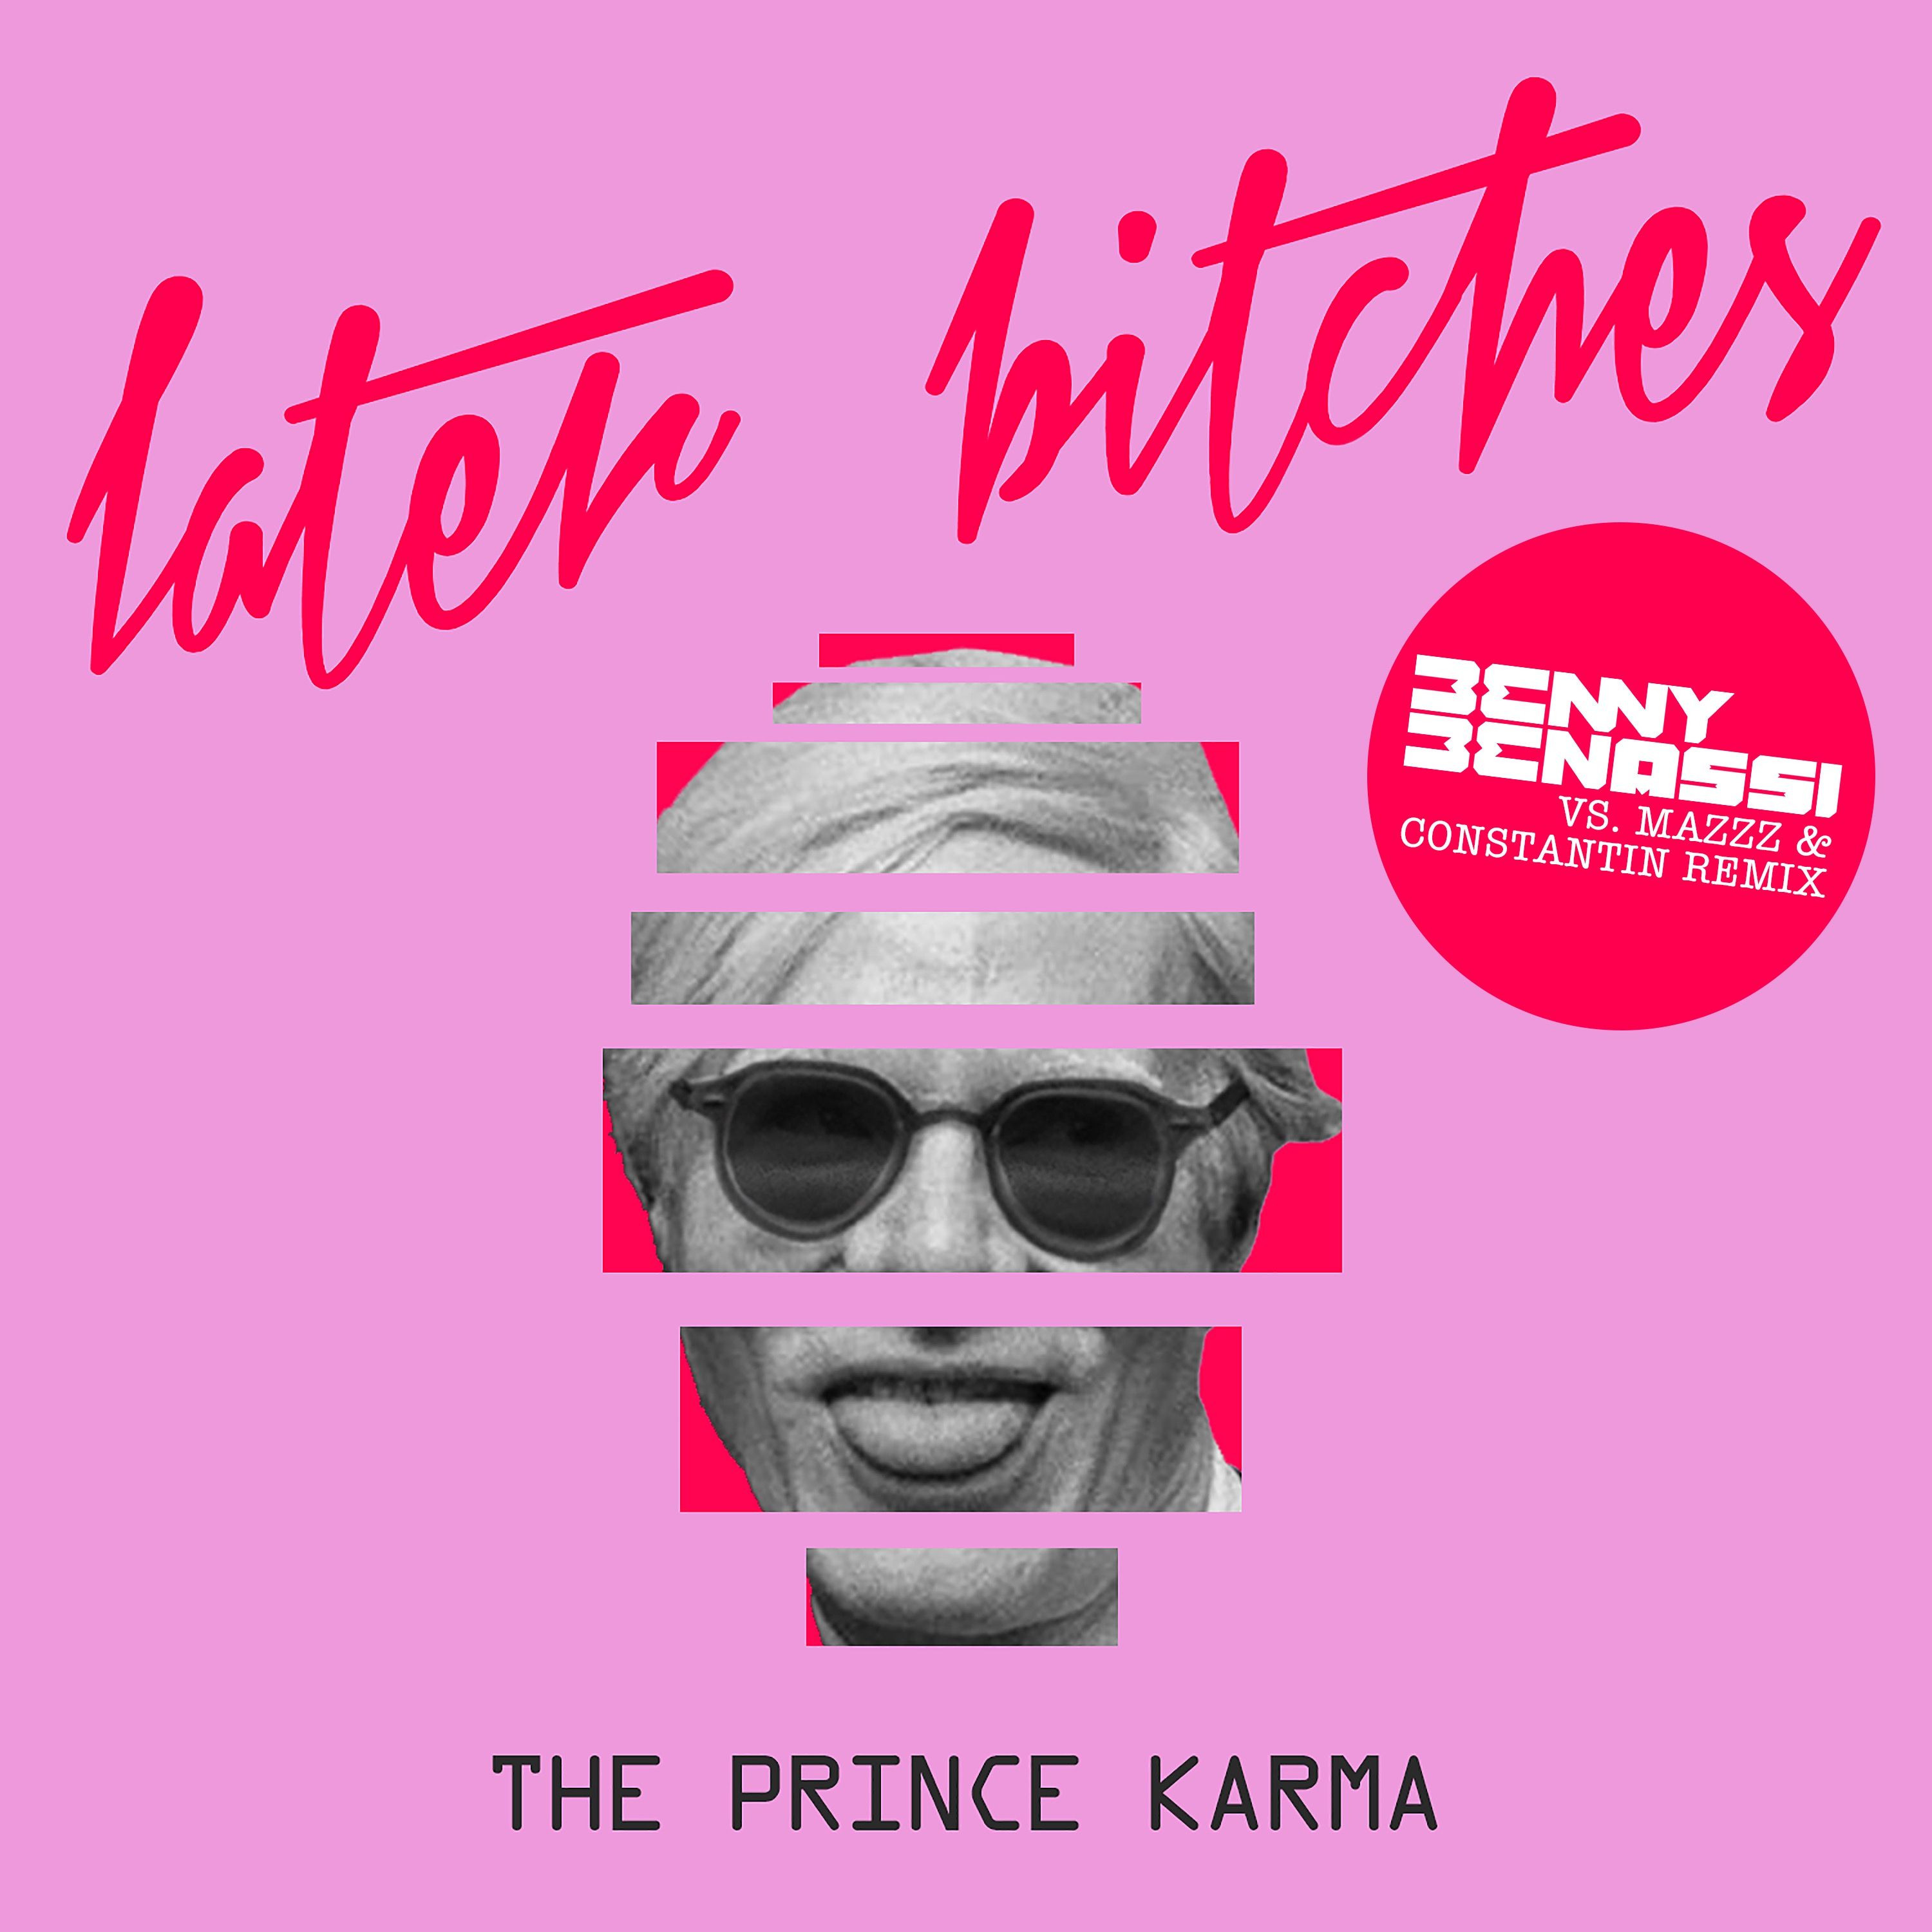 Preuzimanje datoteka The Prince Karma - Later Bitches (Benny Benassi Vs. MazZz & Constantin Remix)